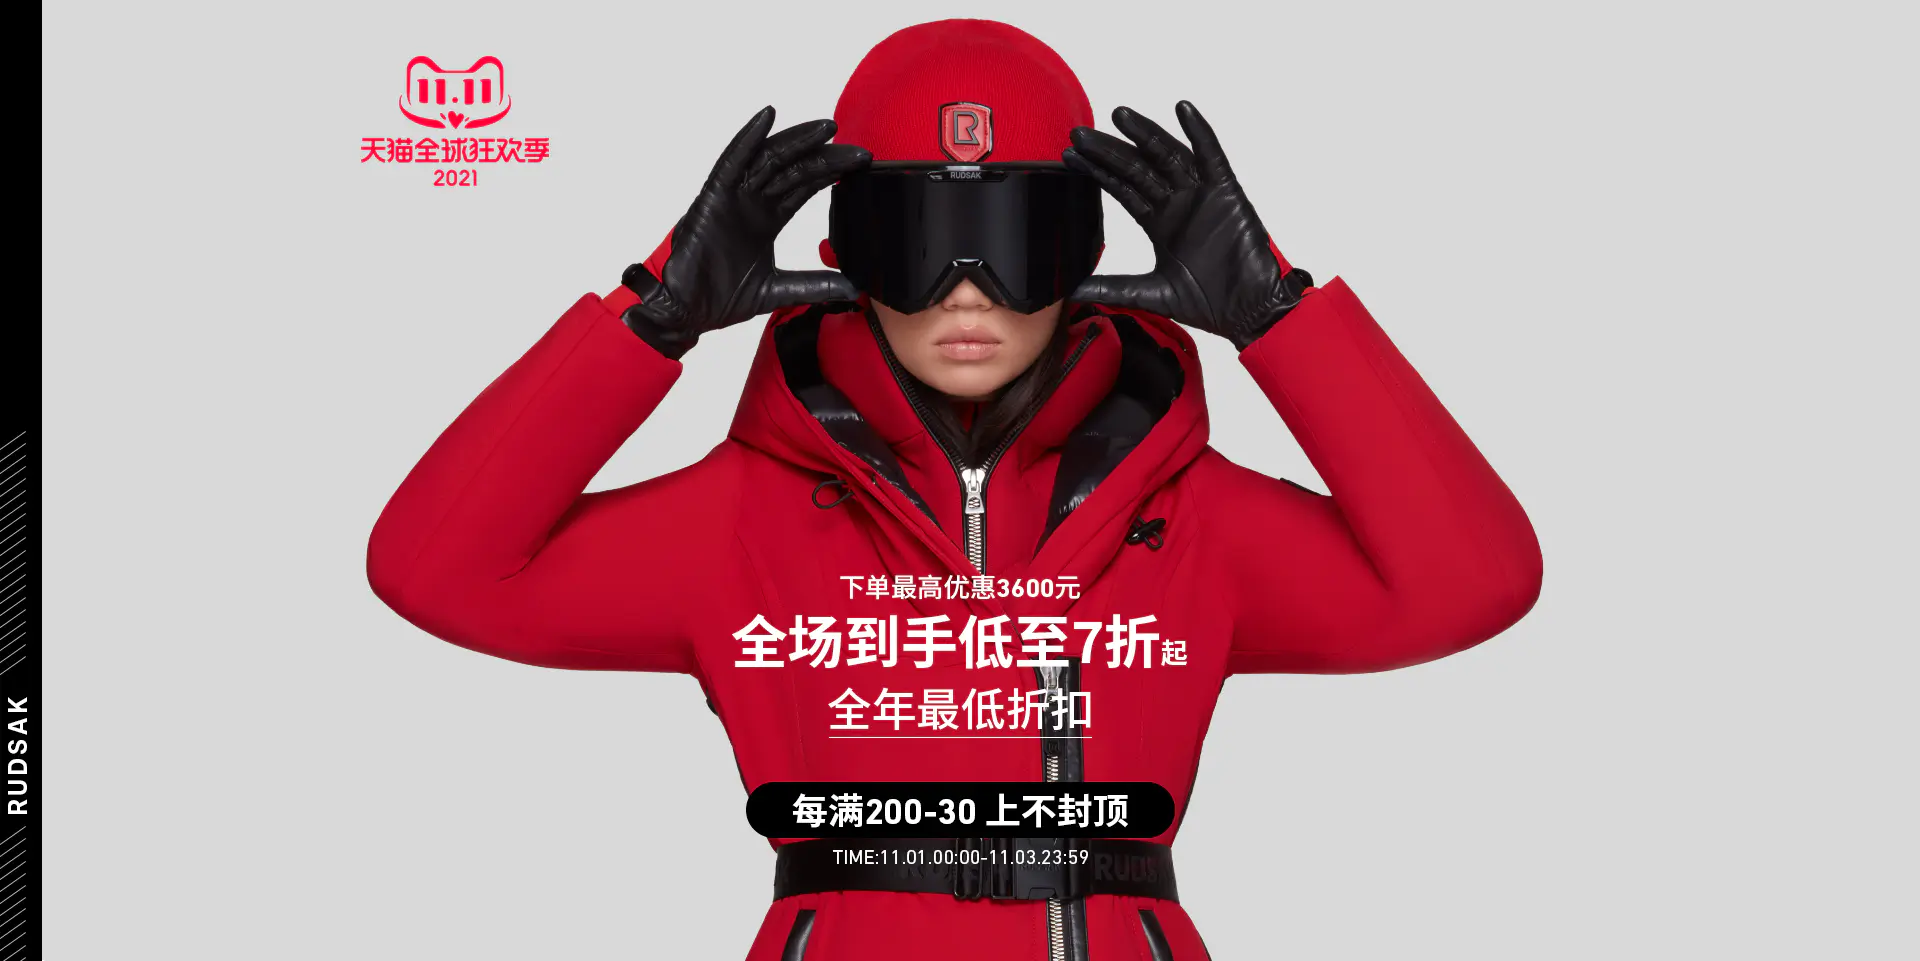 Creative Digital Marketing in China - Rudsak Tmall Singles' Day Promo